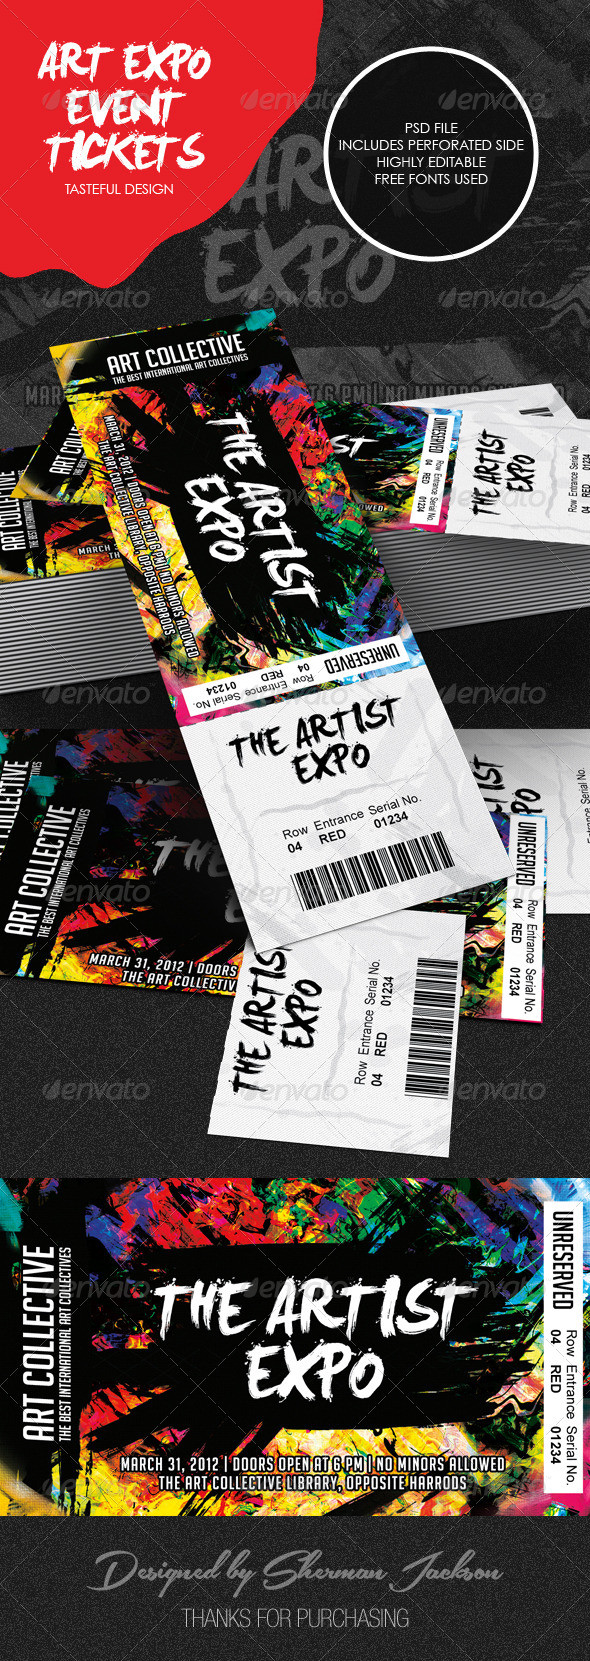 Art event ticket prev